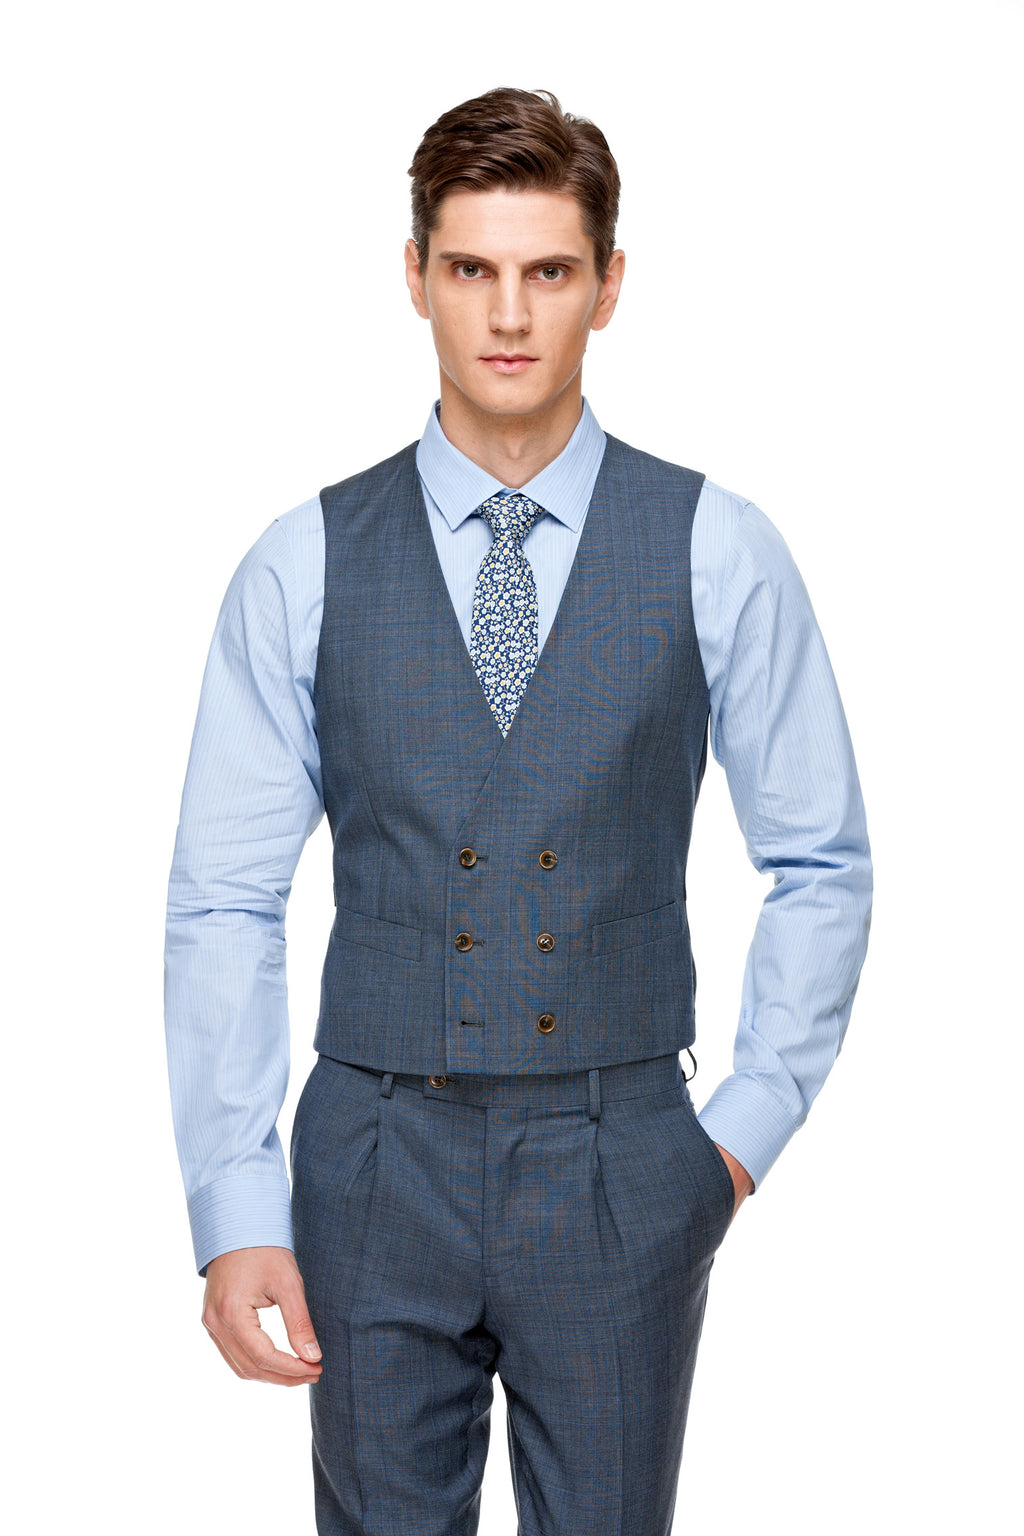 Custom Blue V Standard Shape Vest ottotos